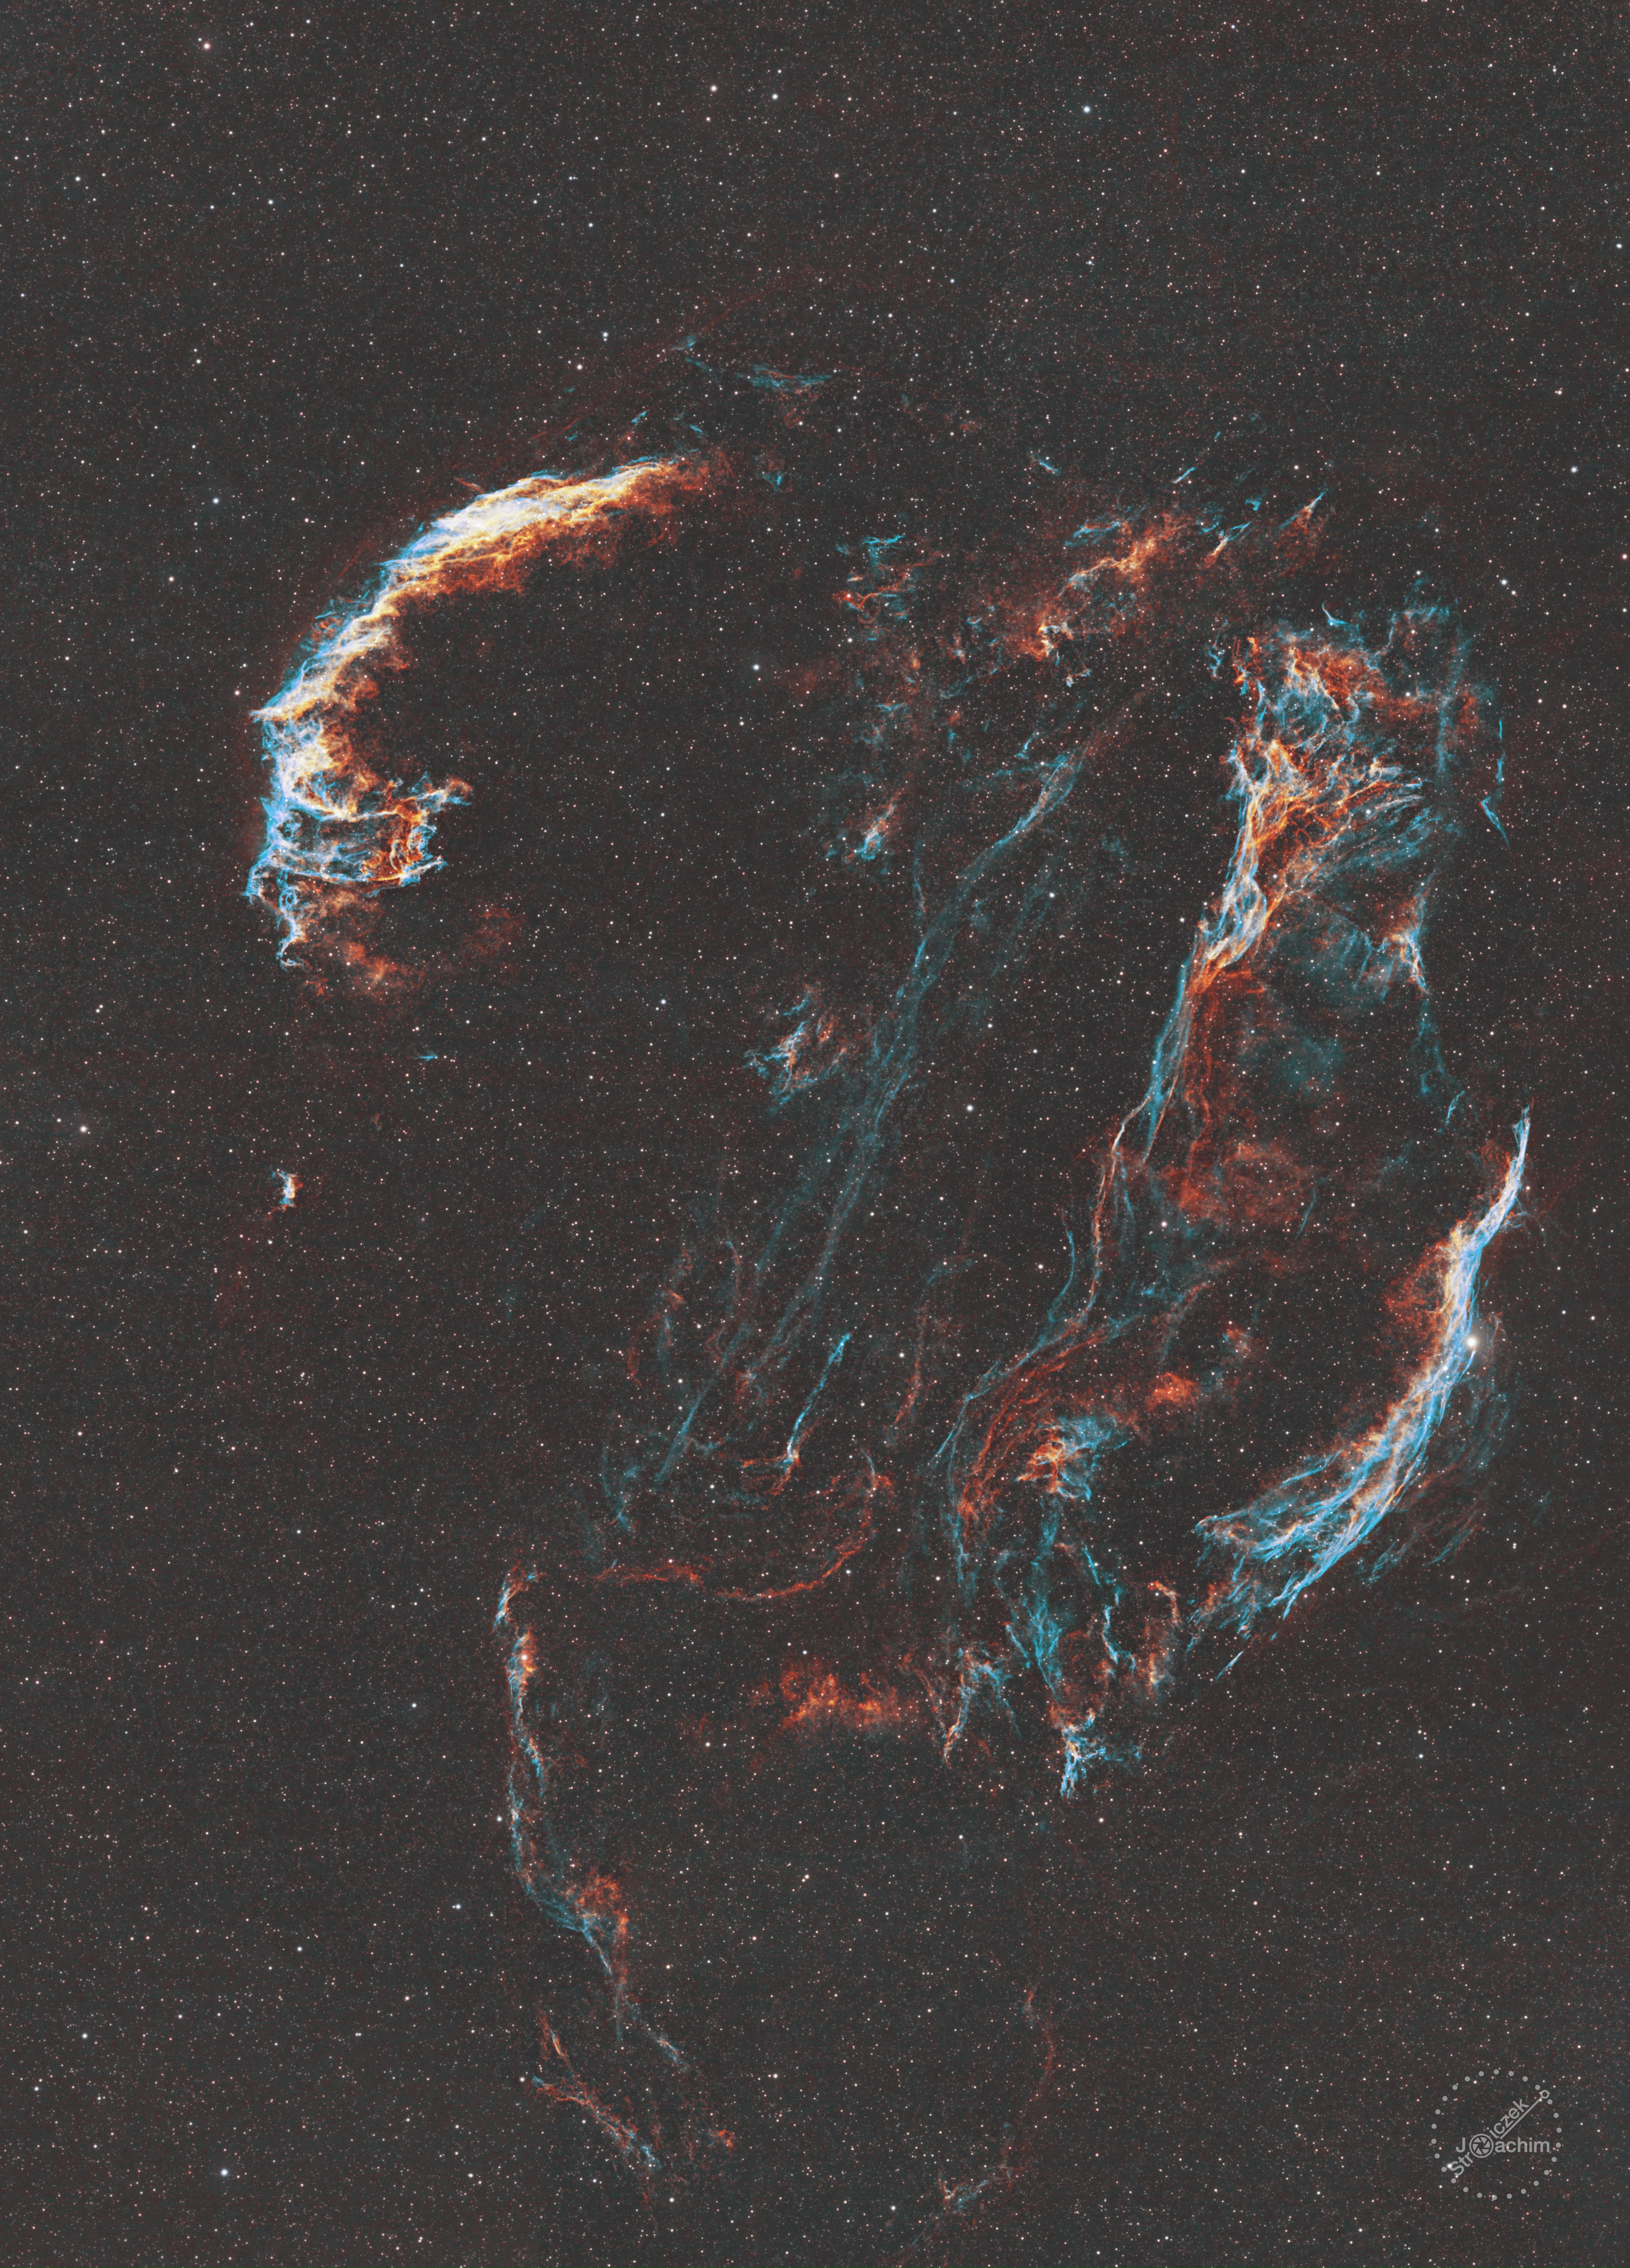 Cirrus-Nebel (Mosaik, 8 Bilder) | September 2021 | ASI183 | Sharpstar 76 | 25x300s